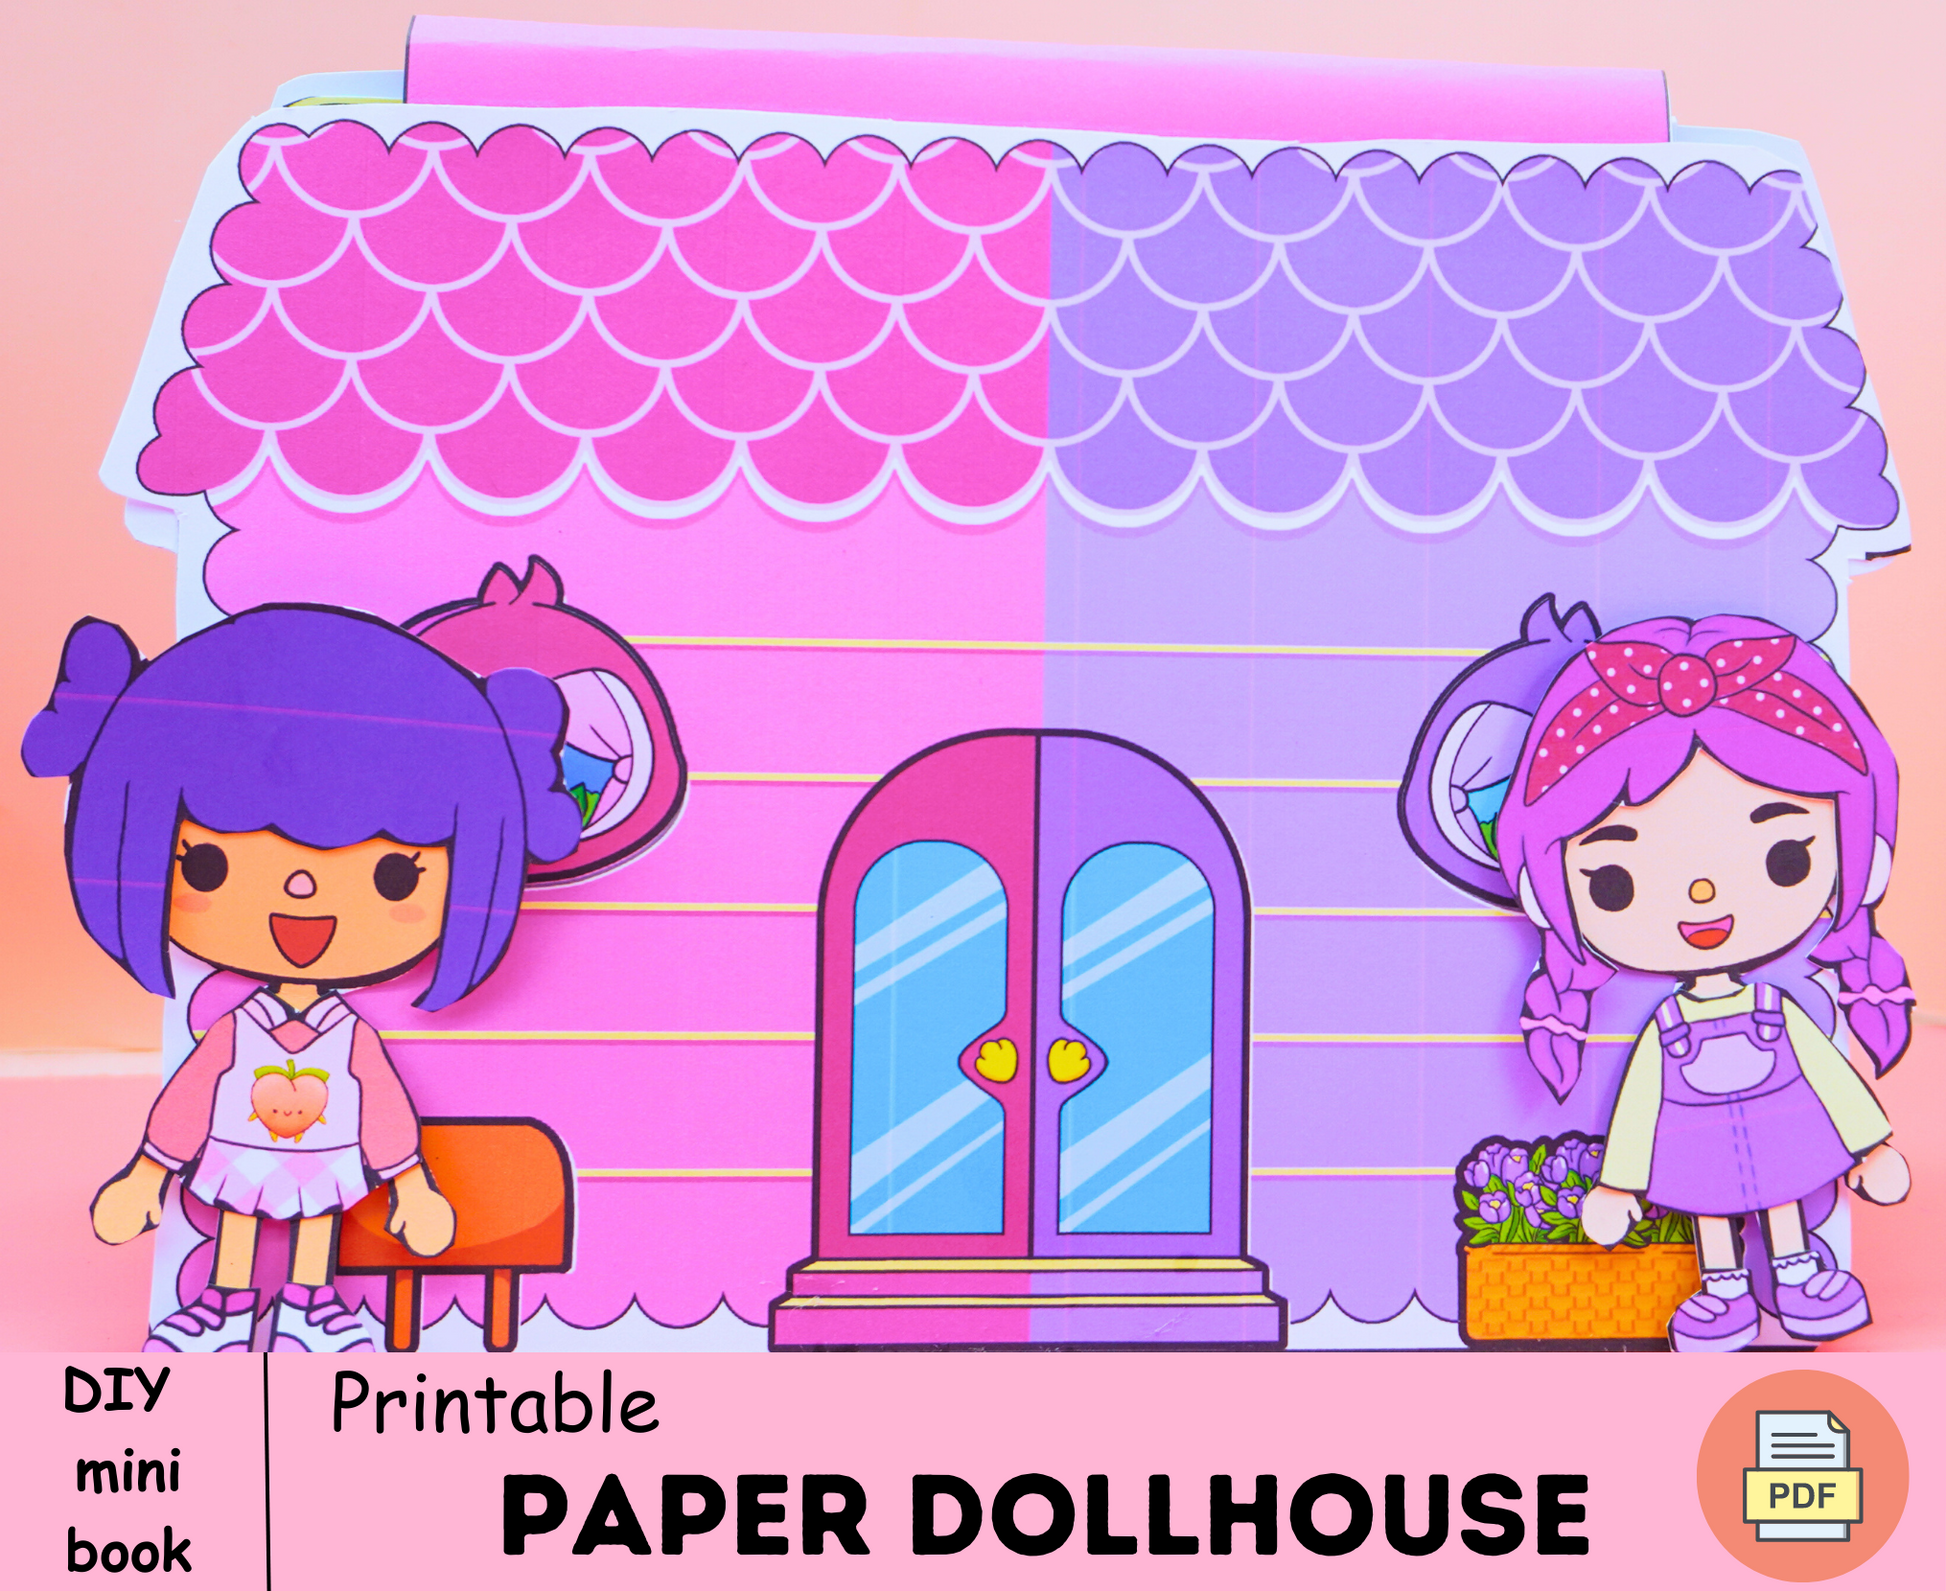 diy crafts doll house paper｜TikTok Search